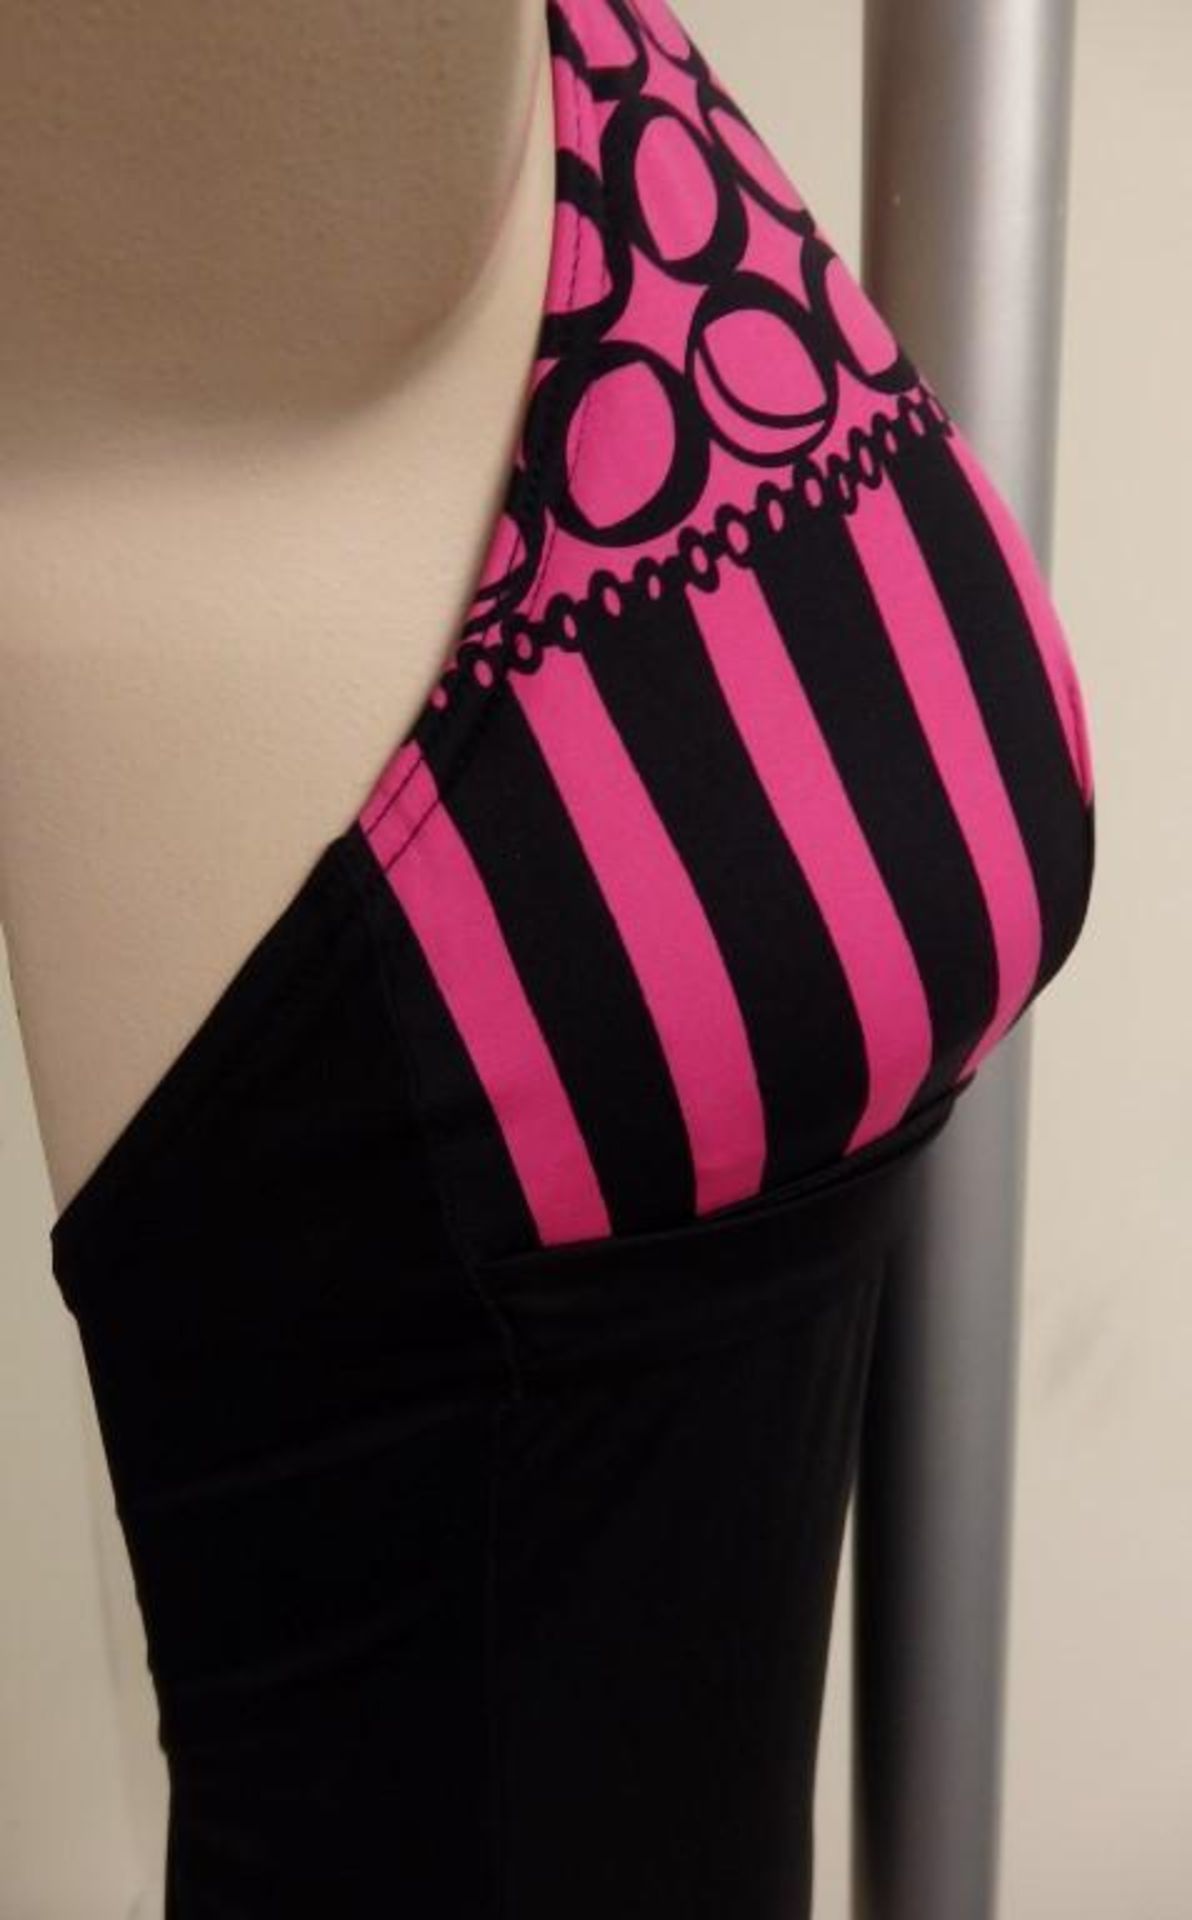 1 x Rasurel - Black/Pink patterned - Borneo Swimsuit - R20434 - Size 2C - UK 32 - Fr 85 - EU/Int 70 - Image 7 of 7